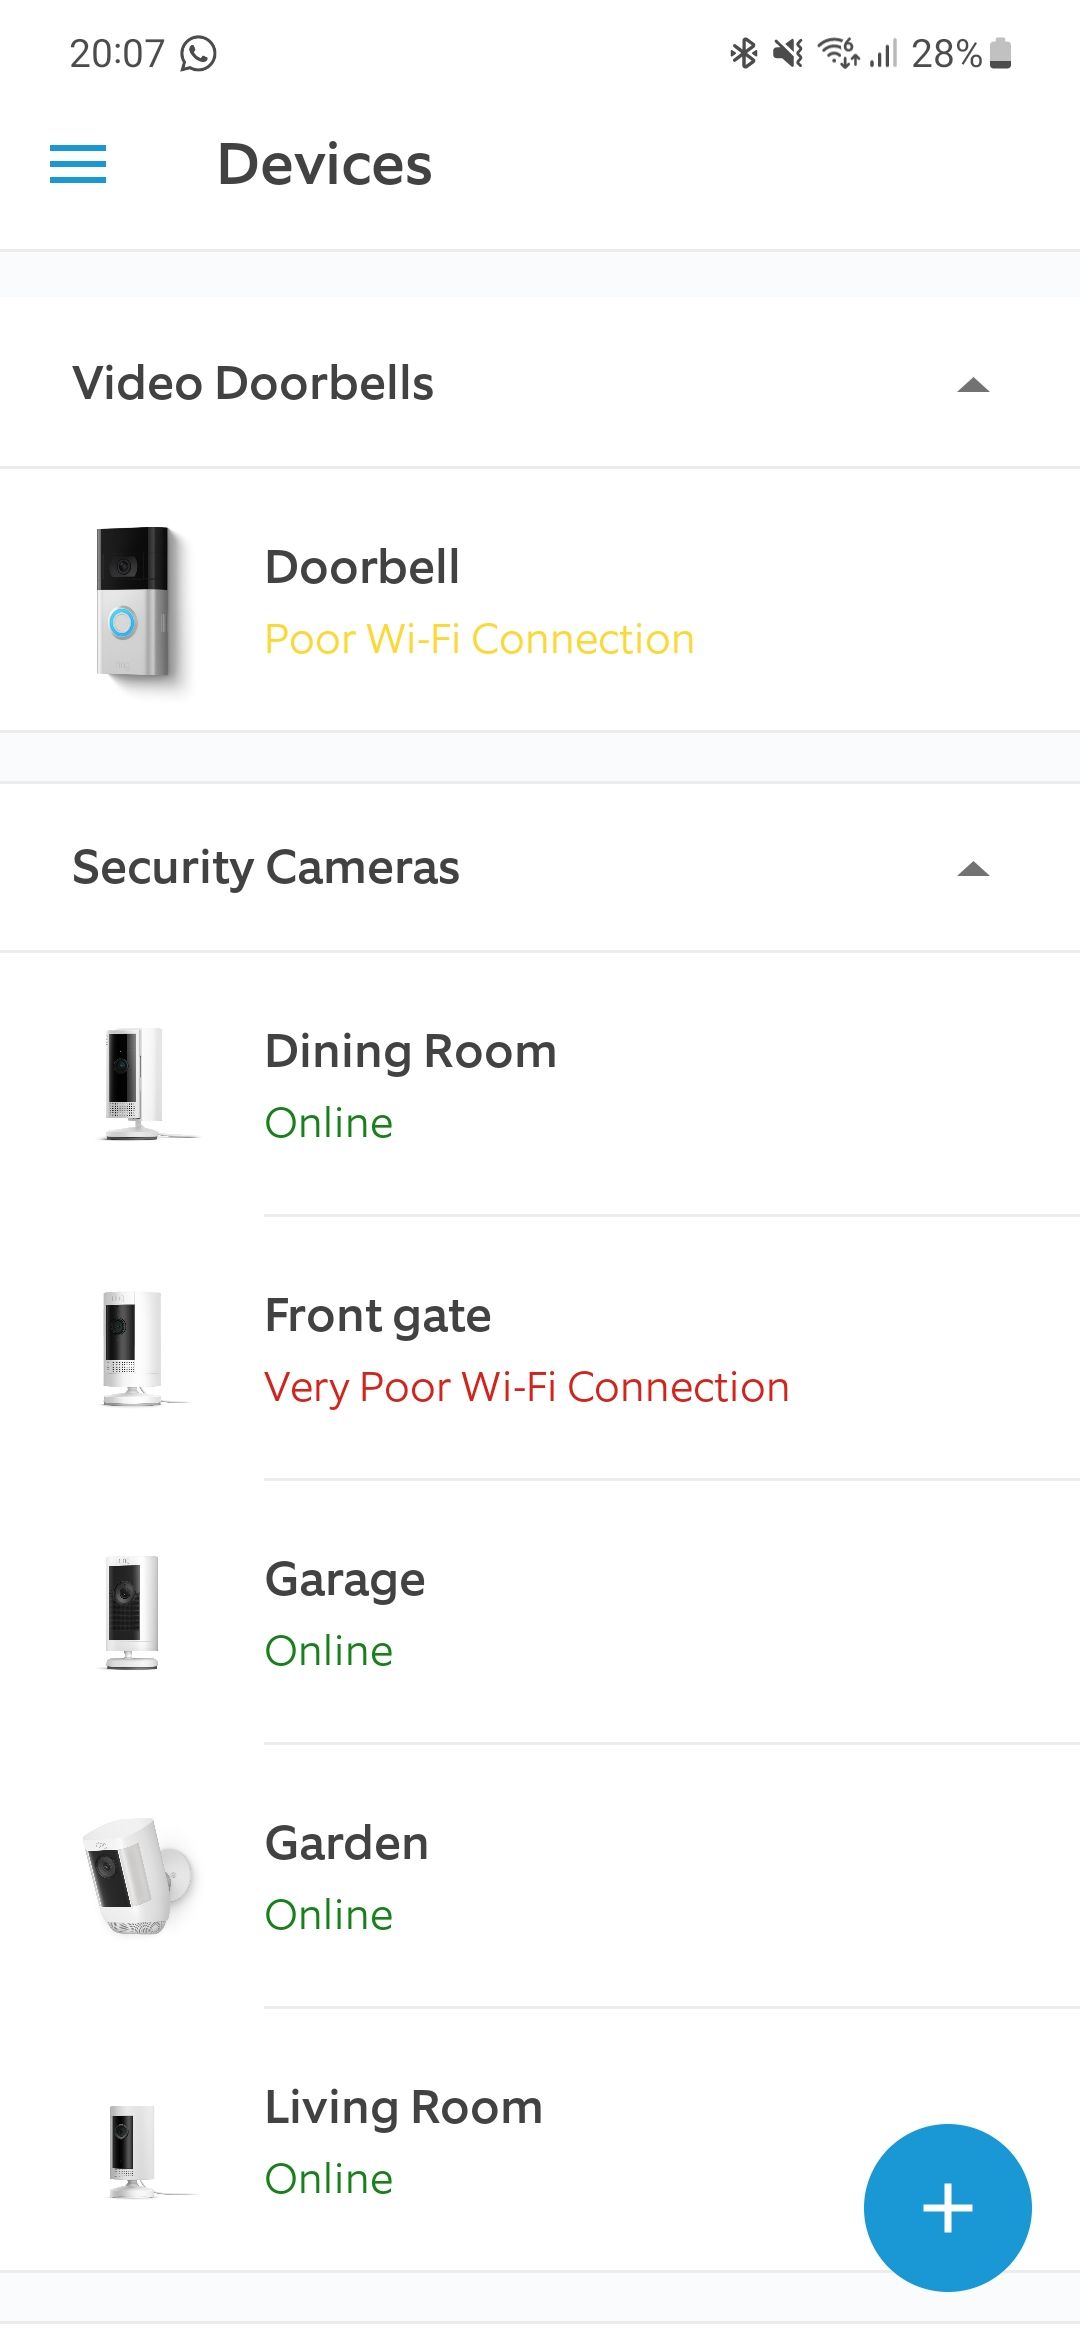 Captura de tela do aplicativo Ring mostrando a lista de dispositivos